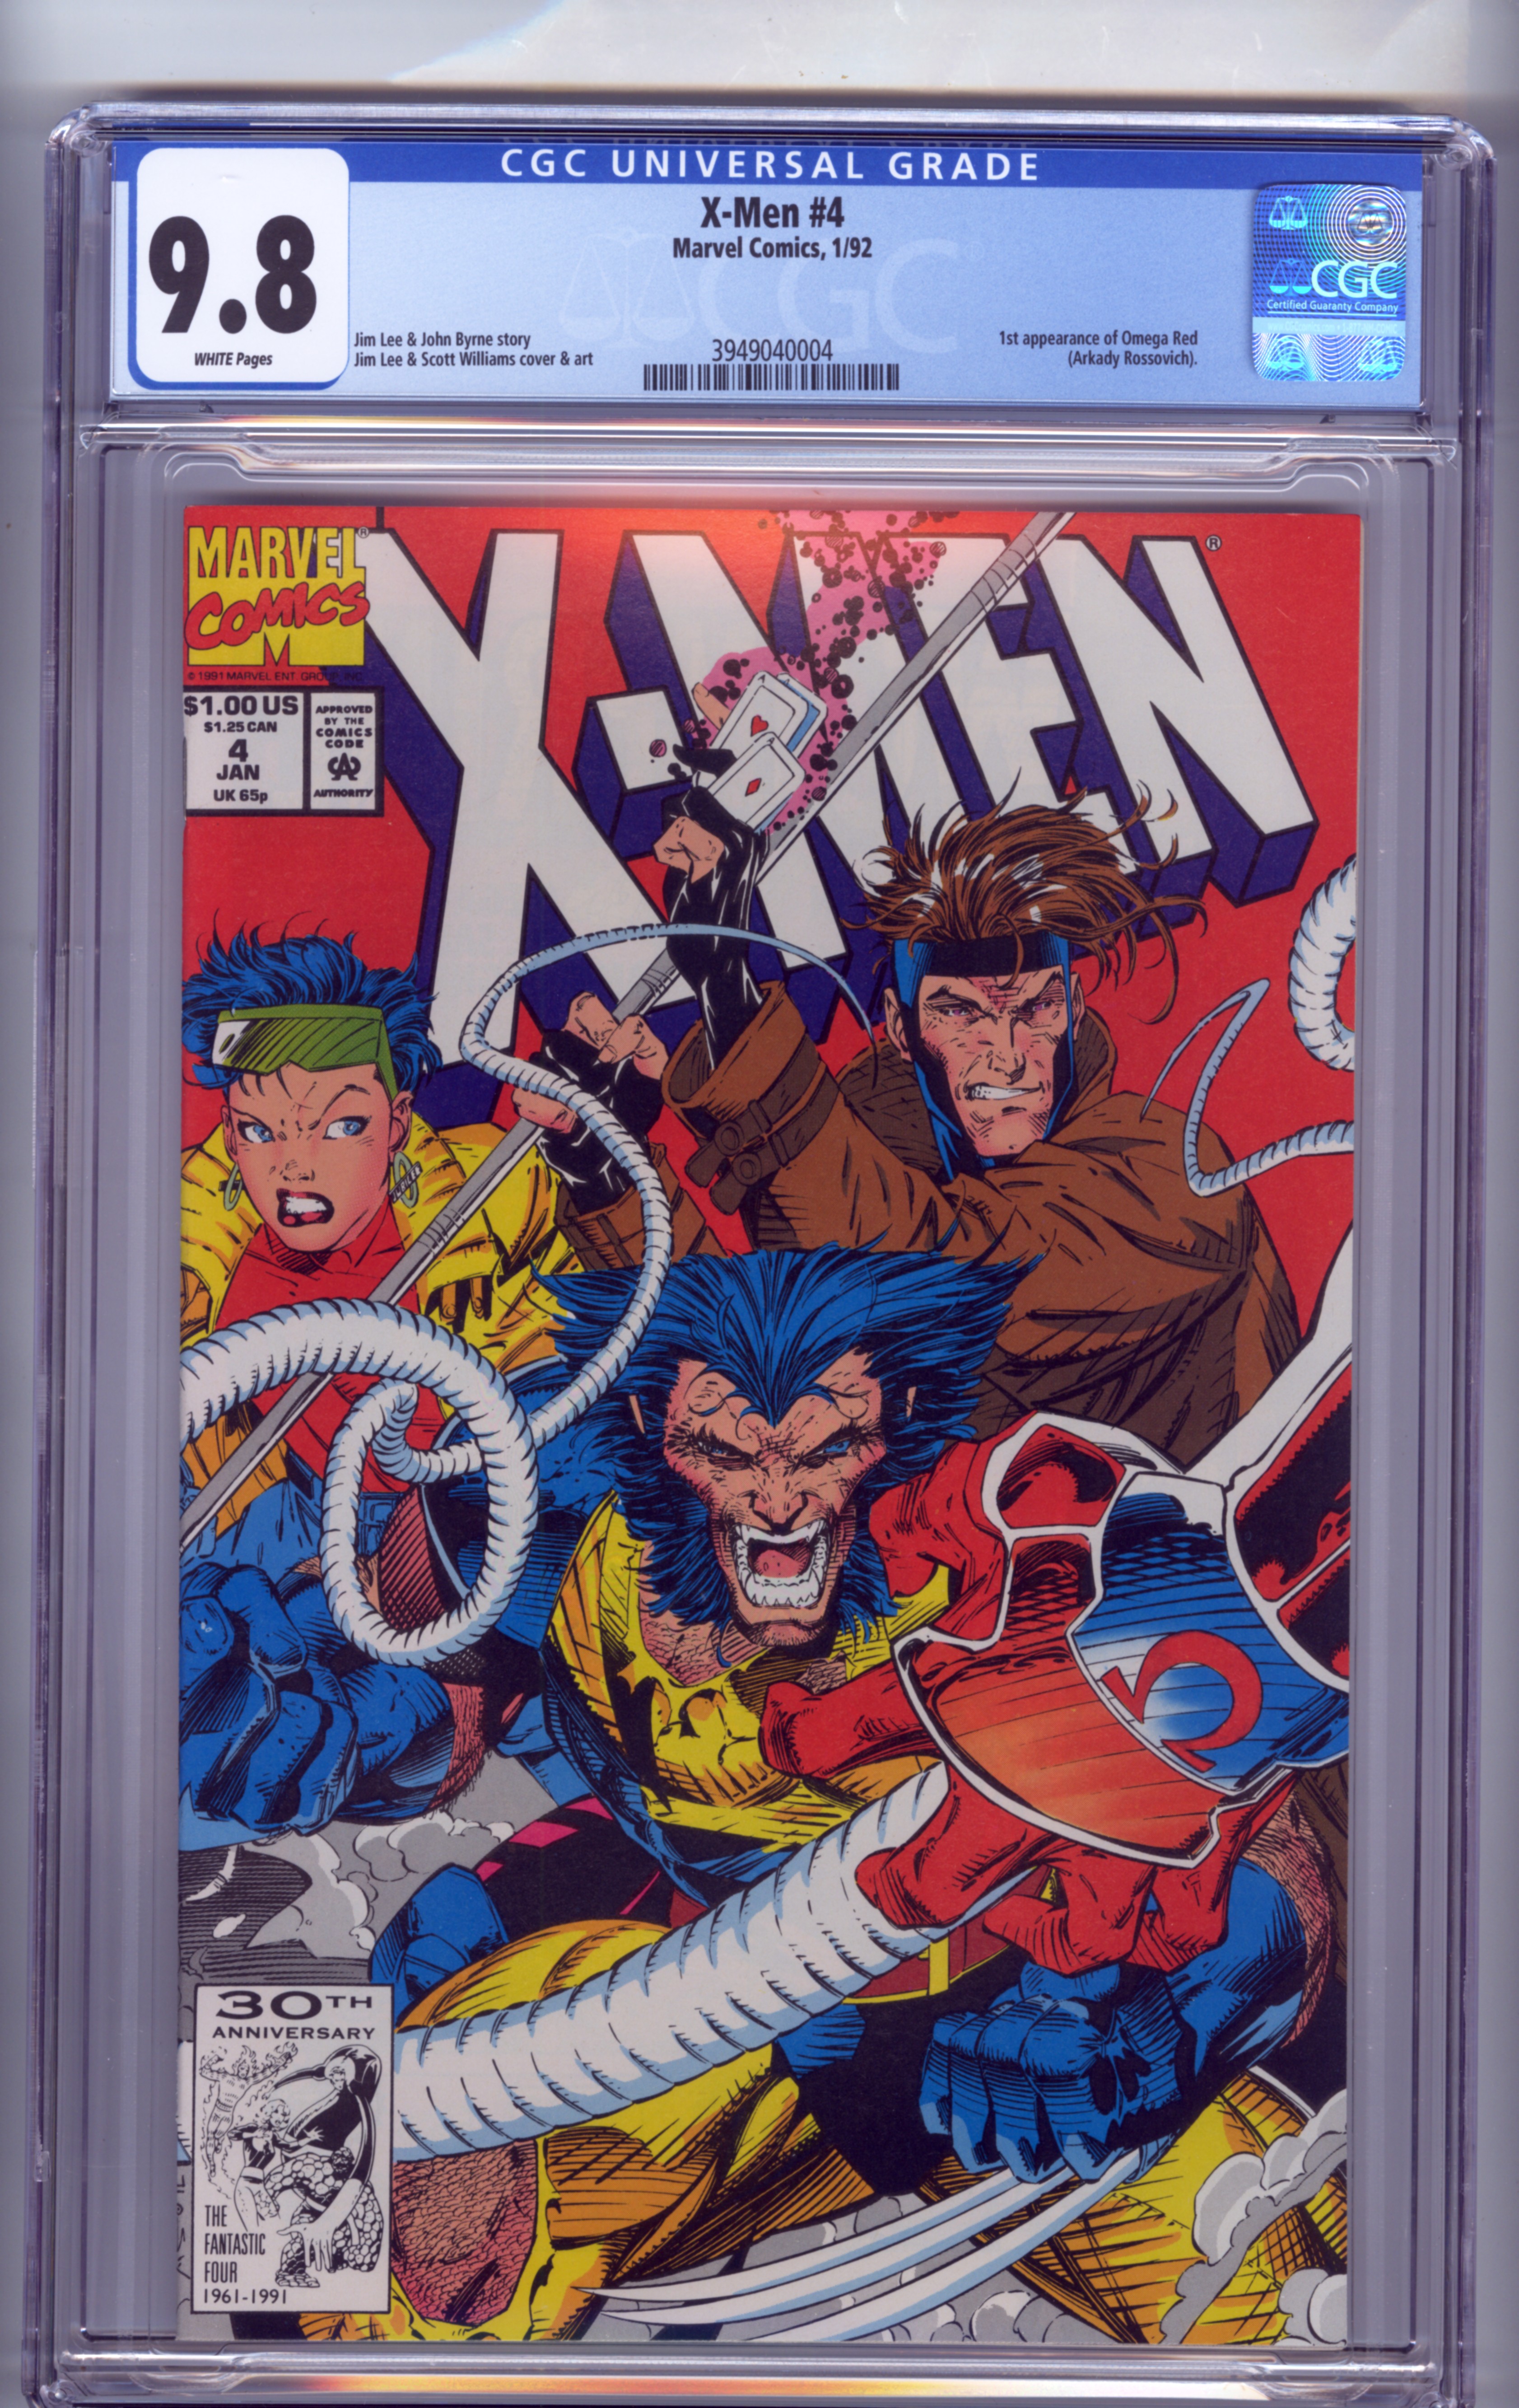 X-Men-4-394904004-fc.jpg